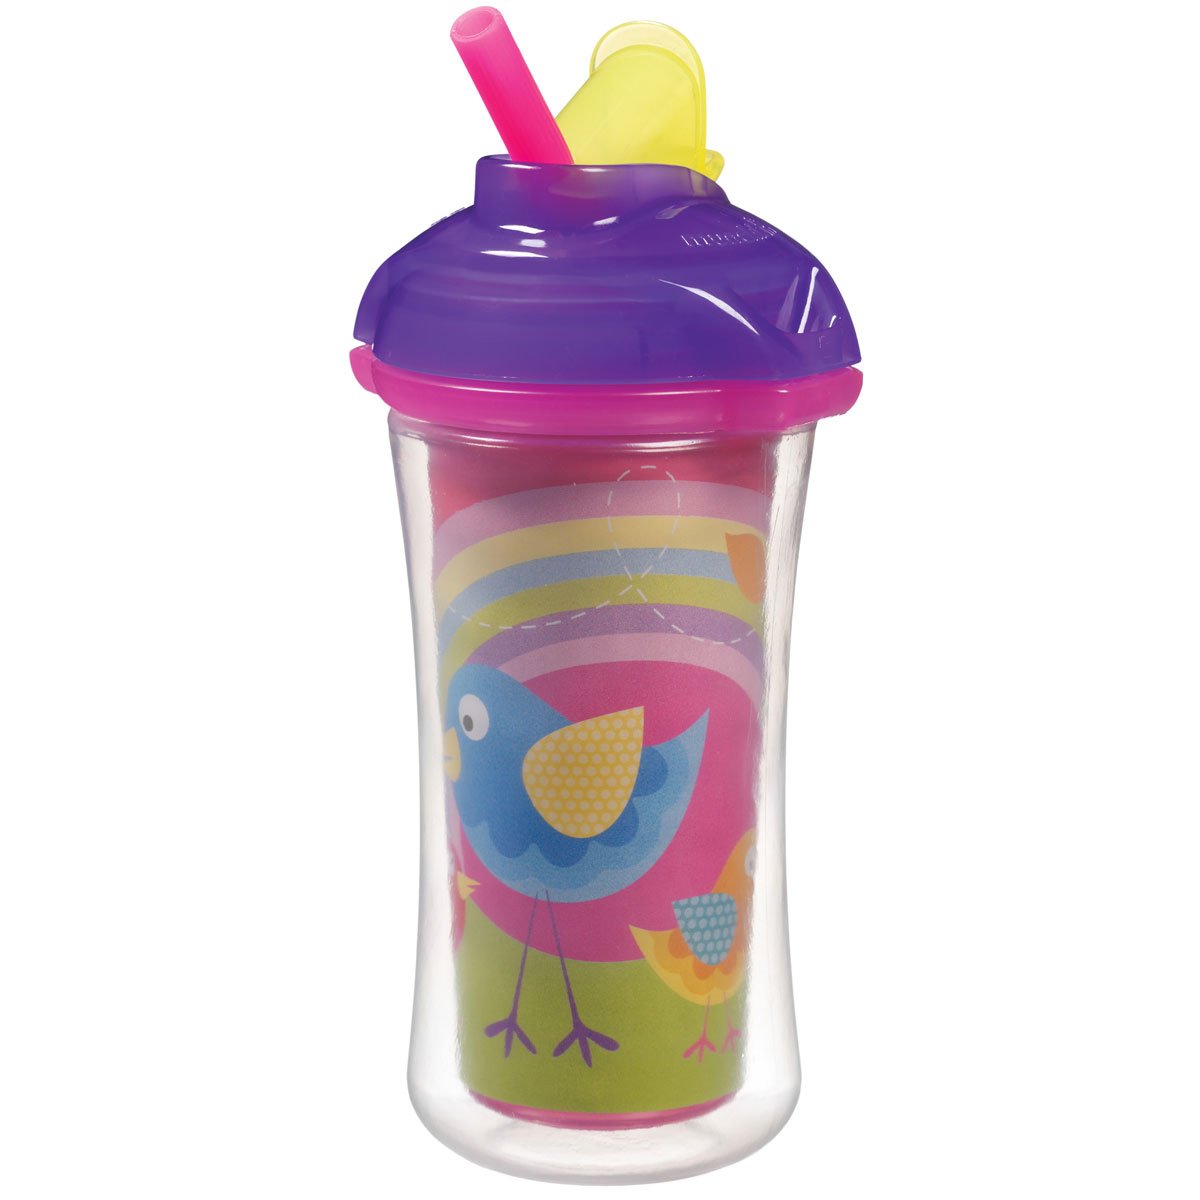 Munchkin Click Lock 9oz Straw Cup, 1 pk (More Colors) - Parents' Favorite